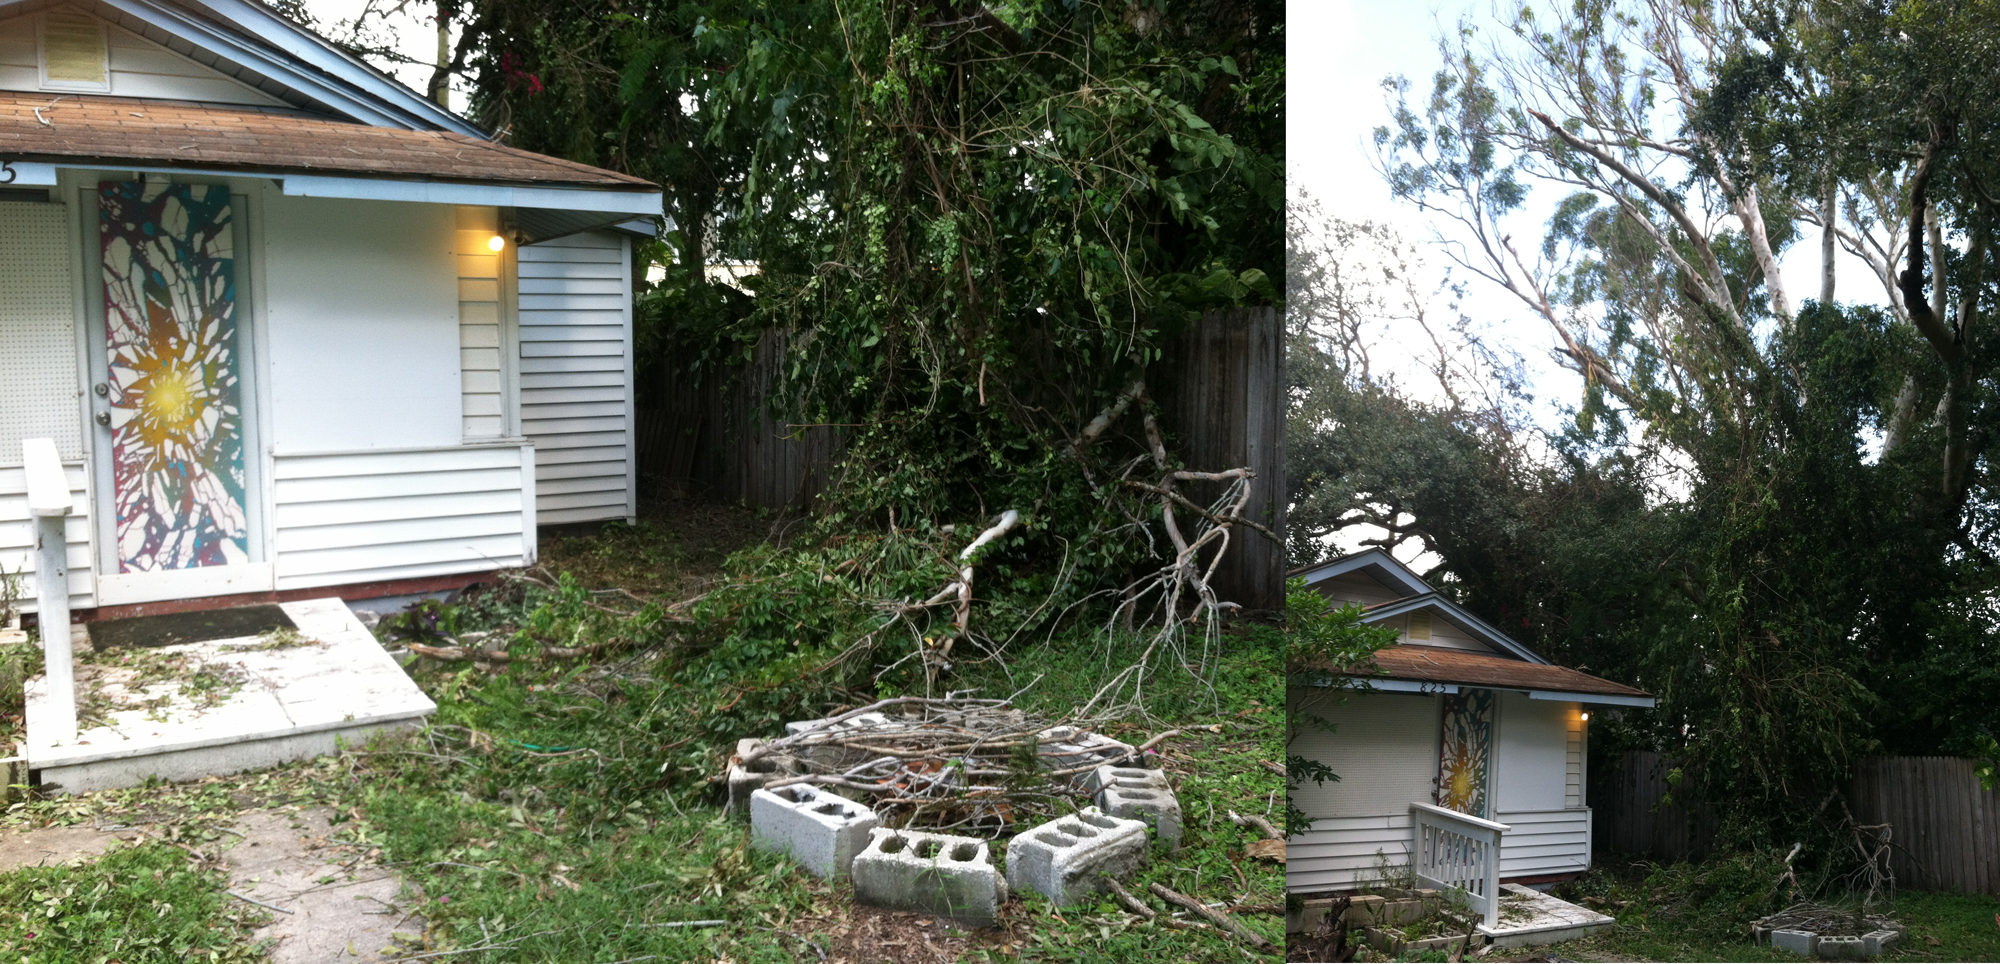 4. Hurricane Season (Divine Dance source materials - fallen eucalyptus branches).jpg